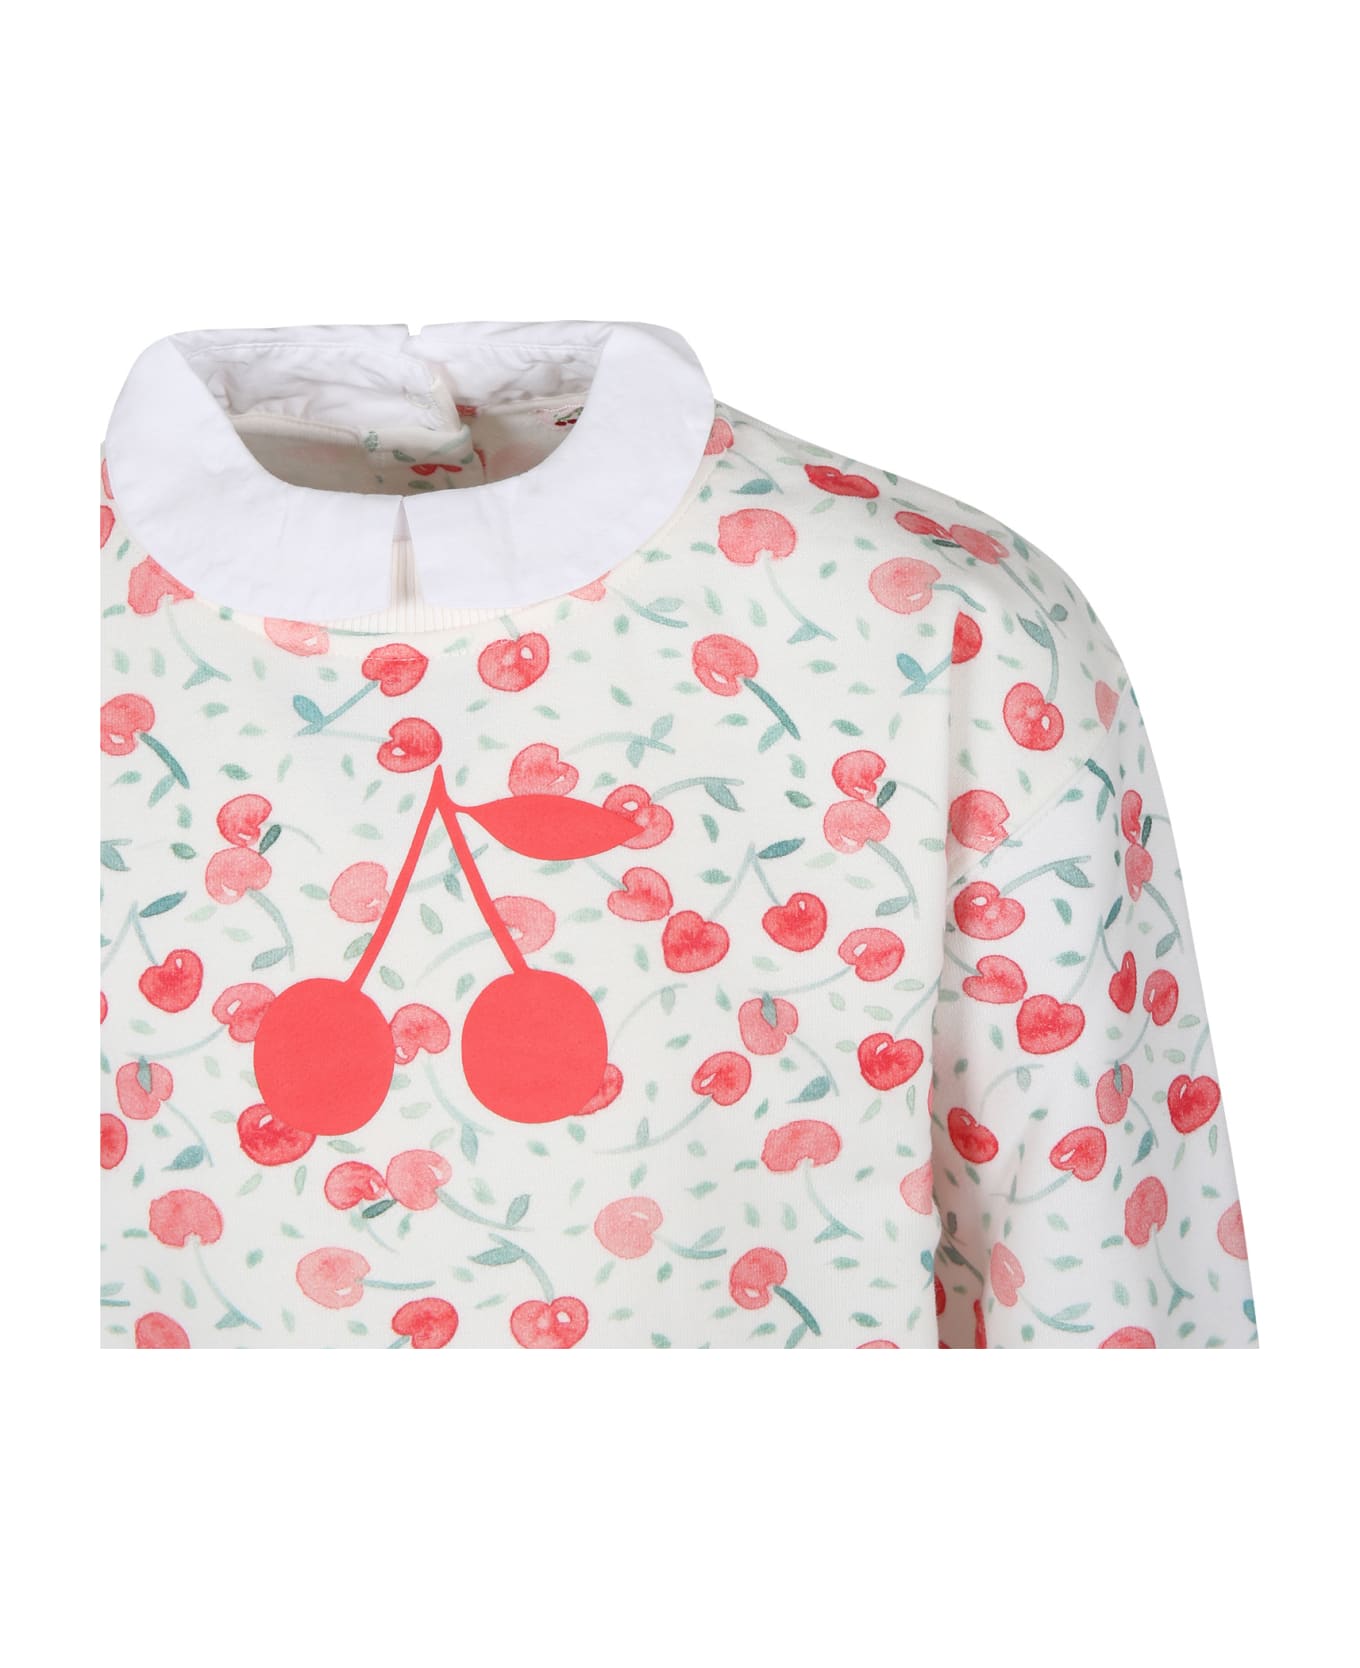 Bonpoint Ivory Sweatshirt For Girl With Iconic Cherries - White